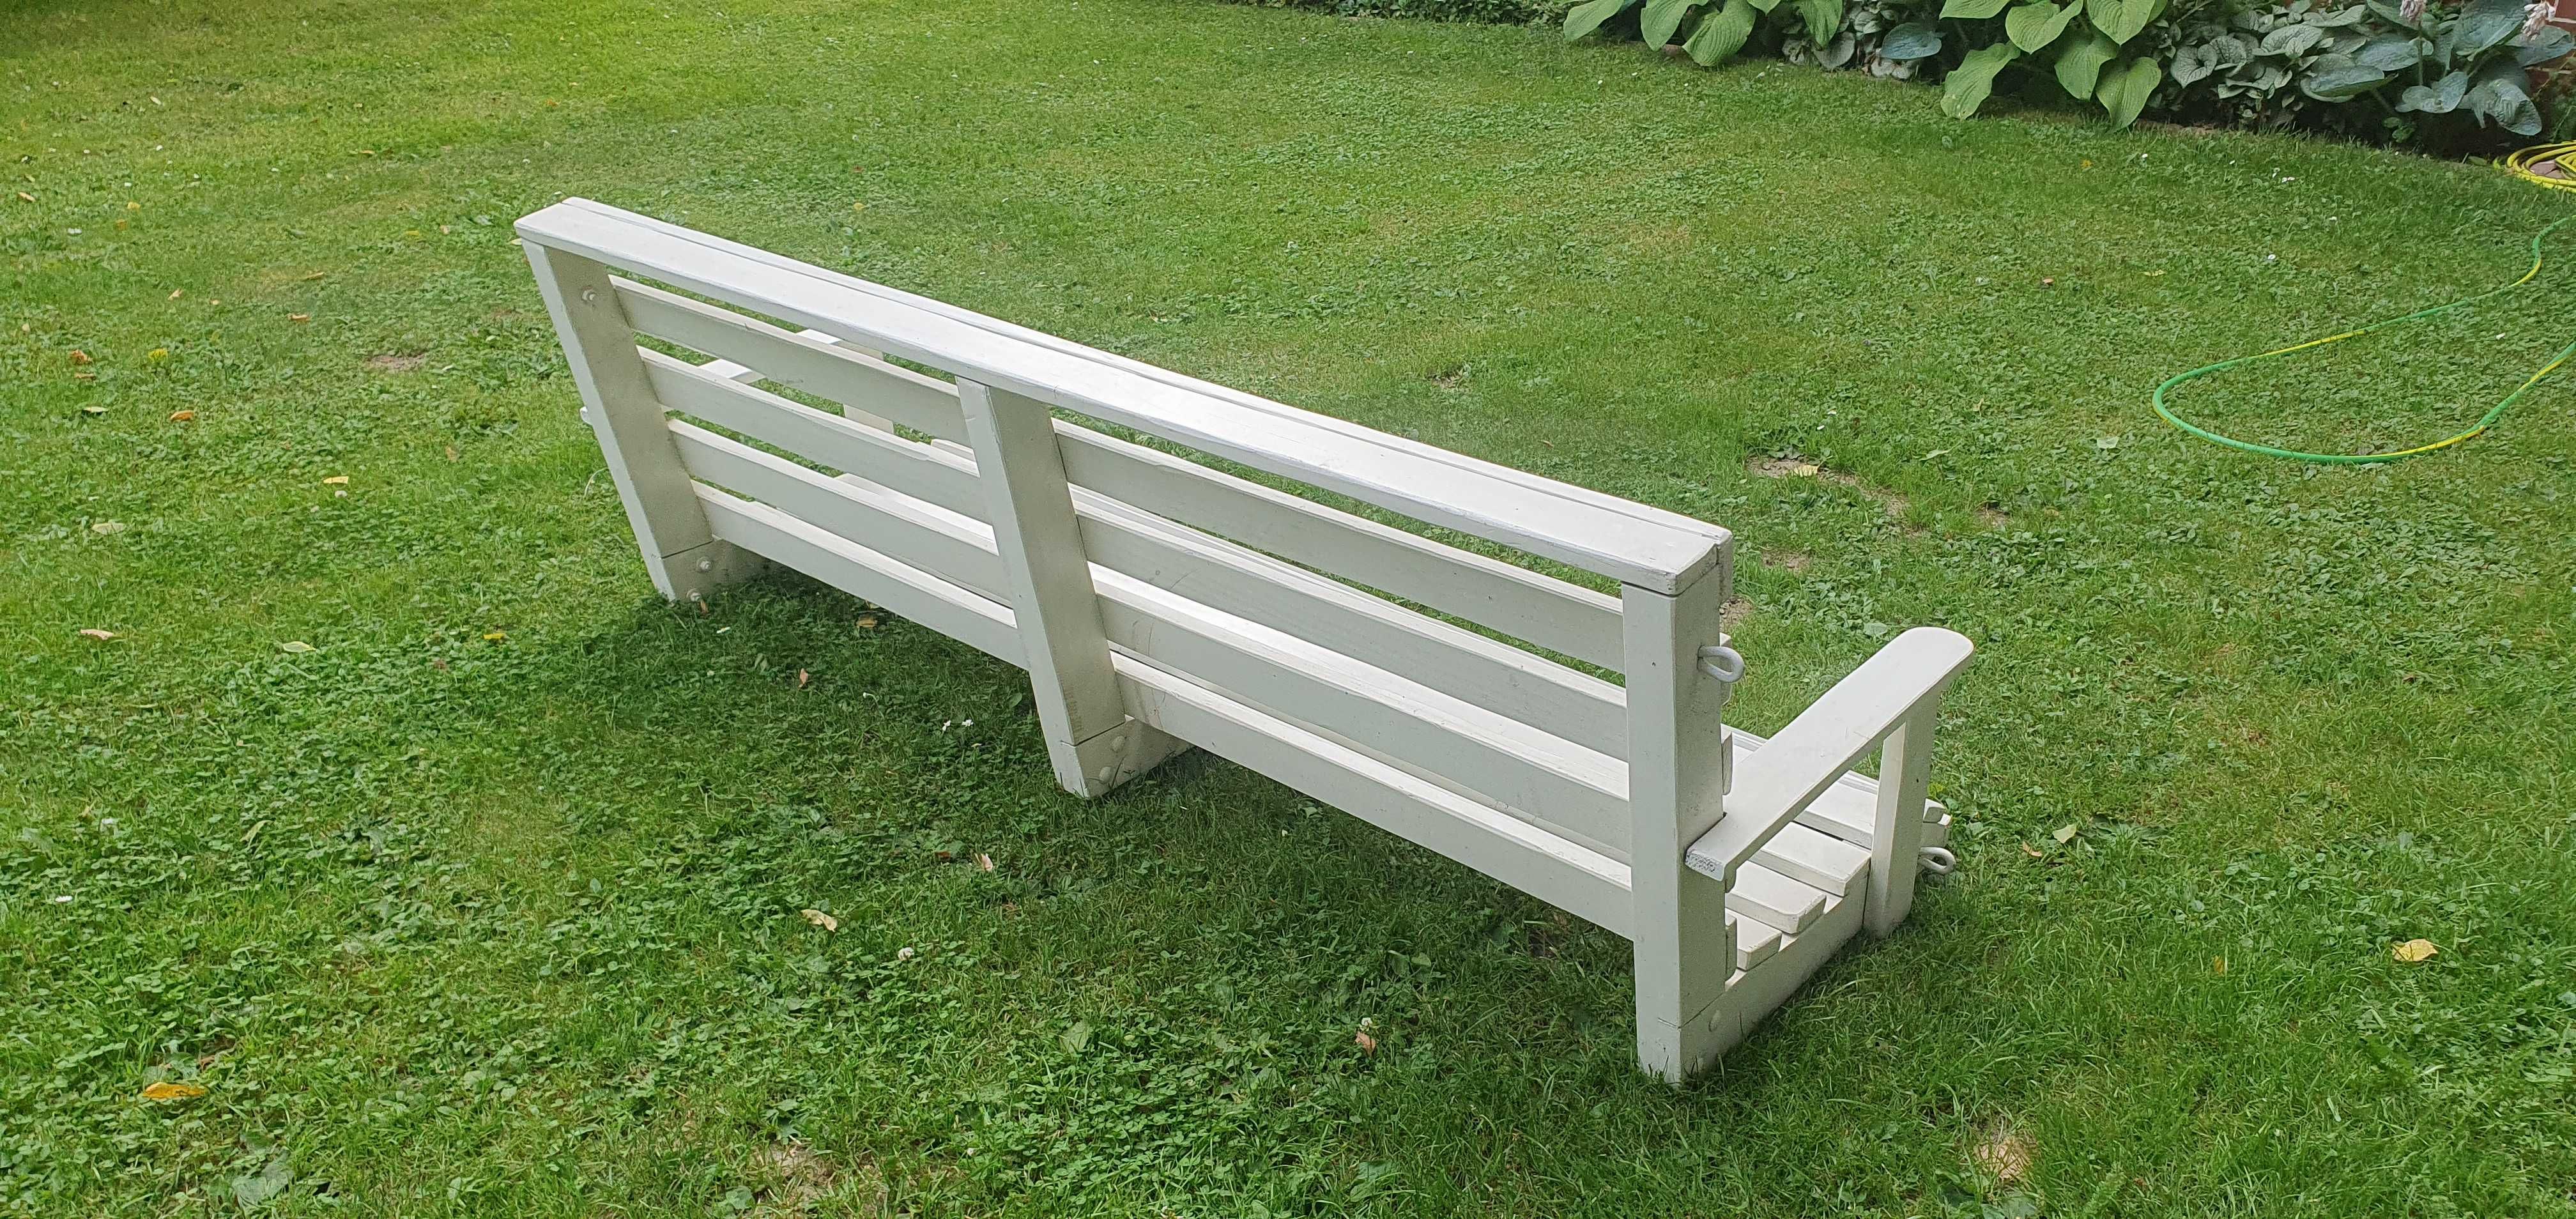 Huśtawka , ławka ogrodowa biała 165cm